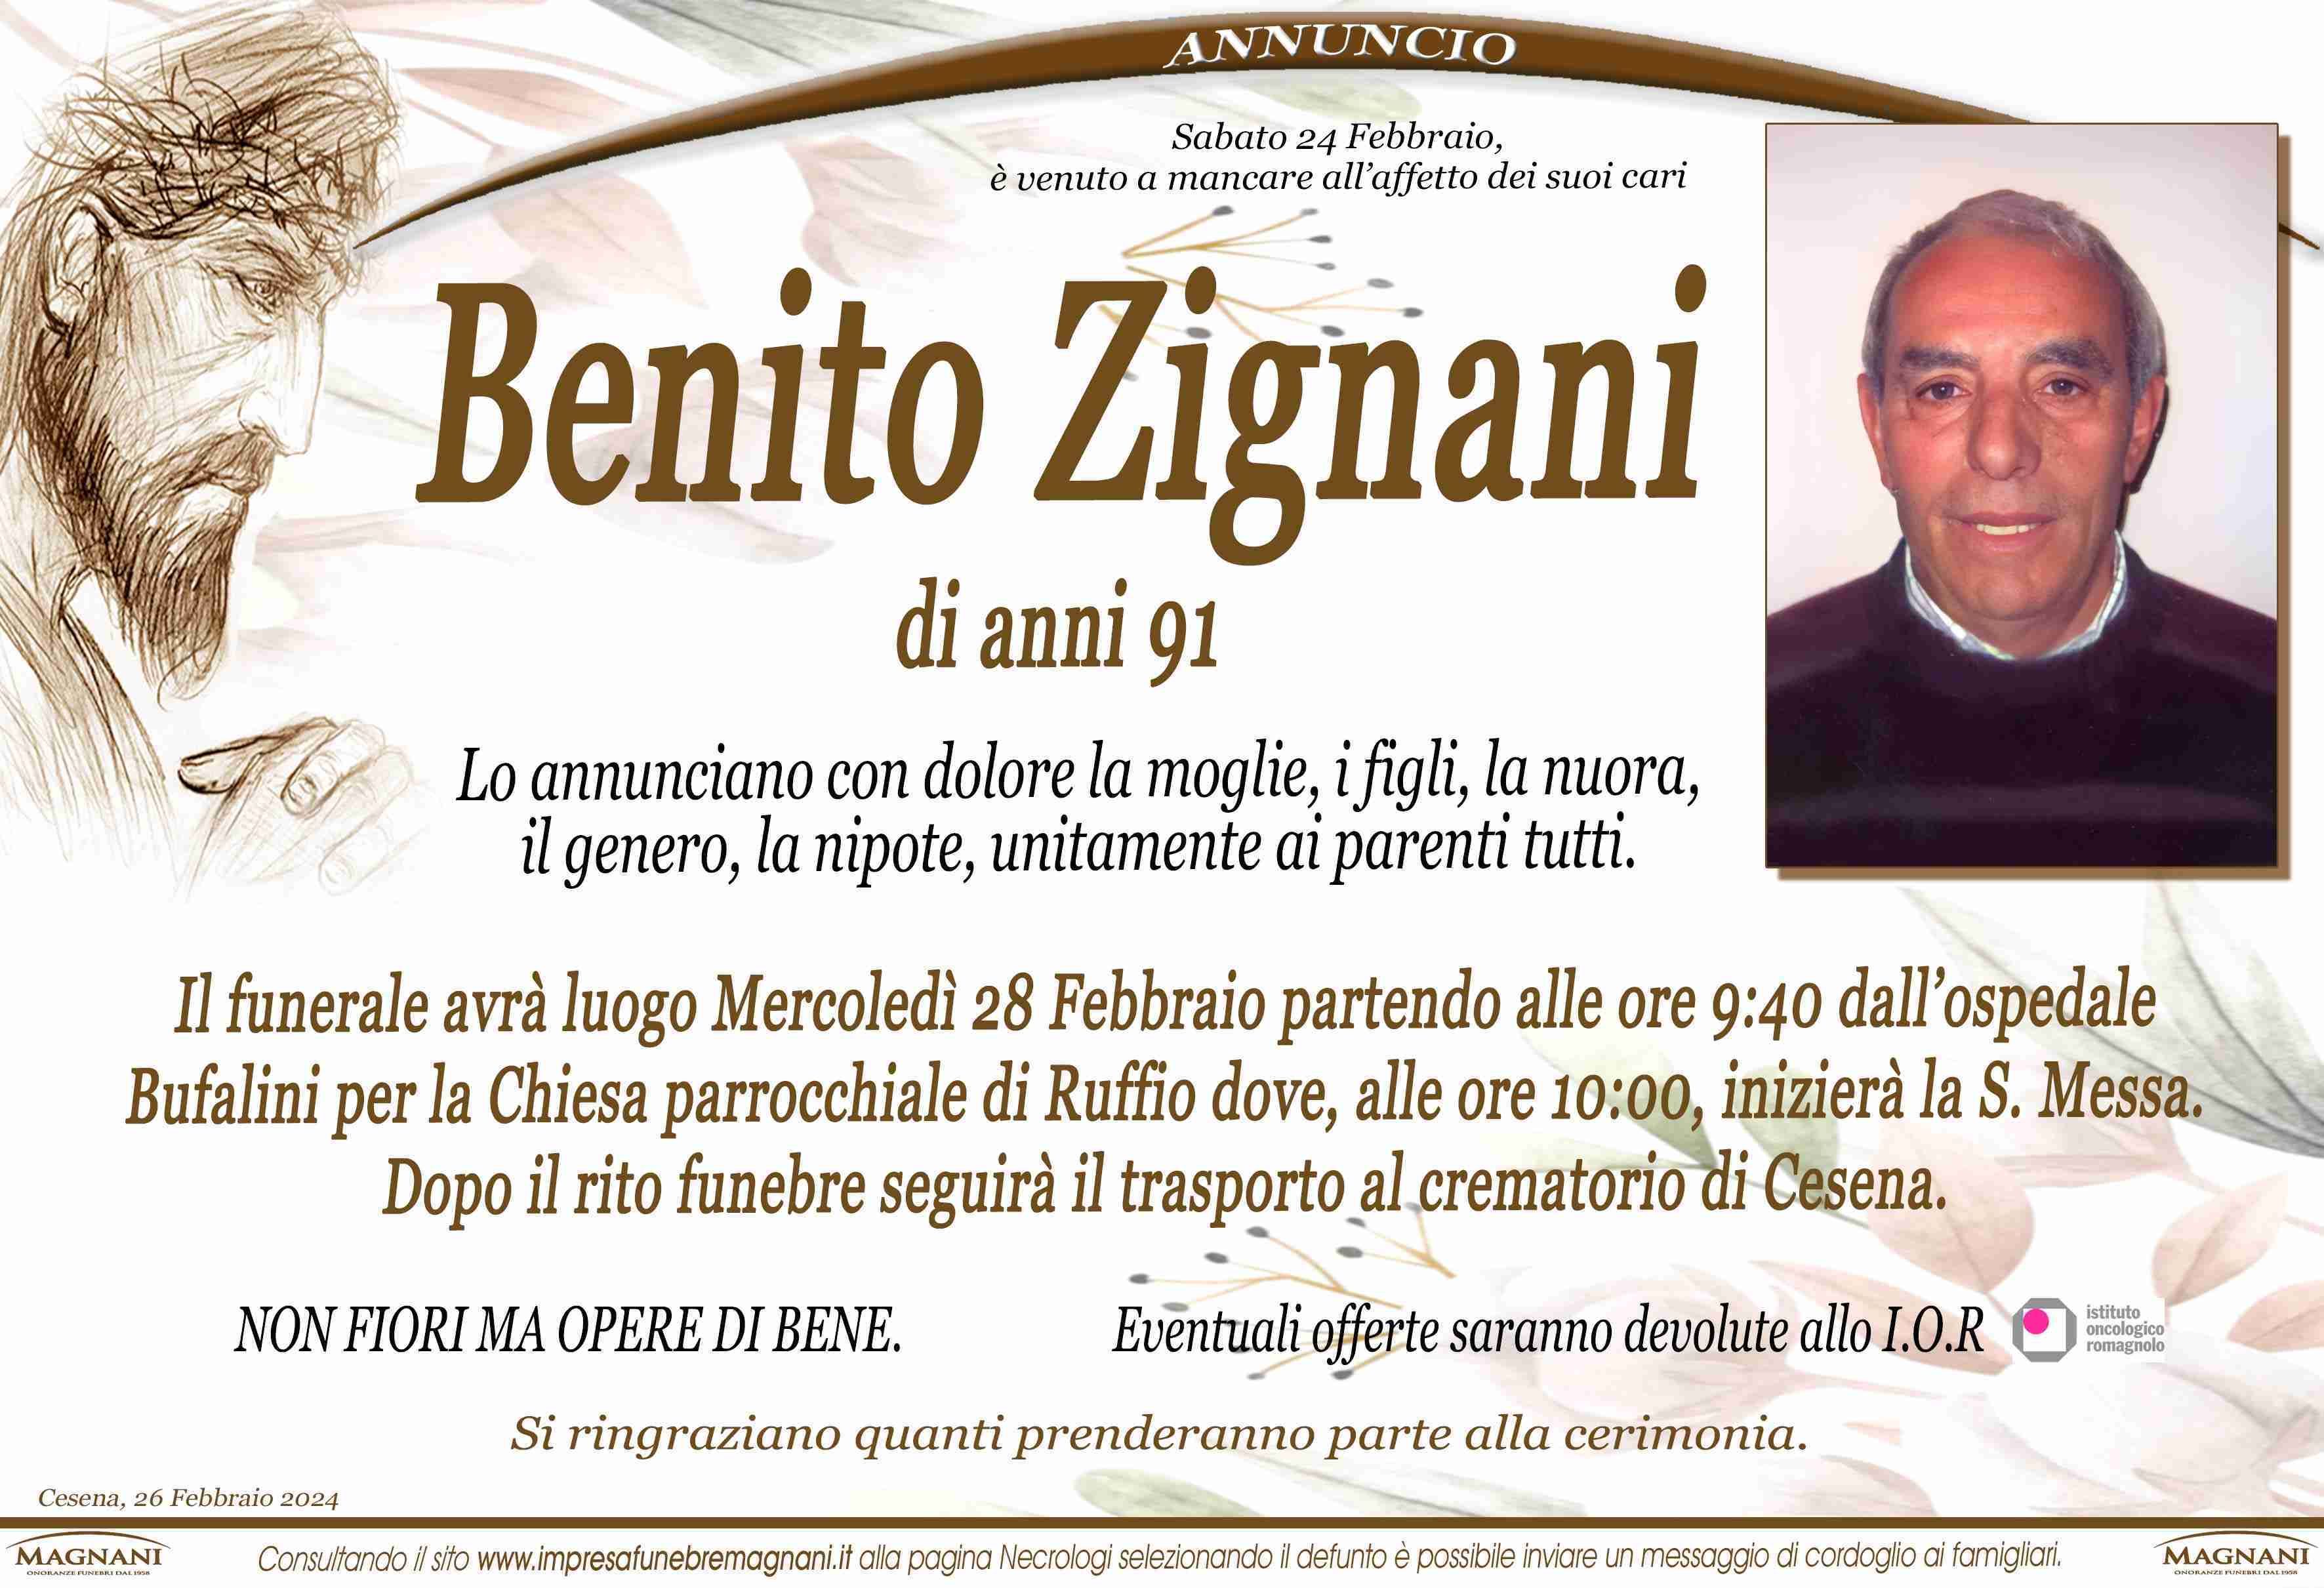 Benito Zignani